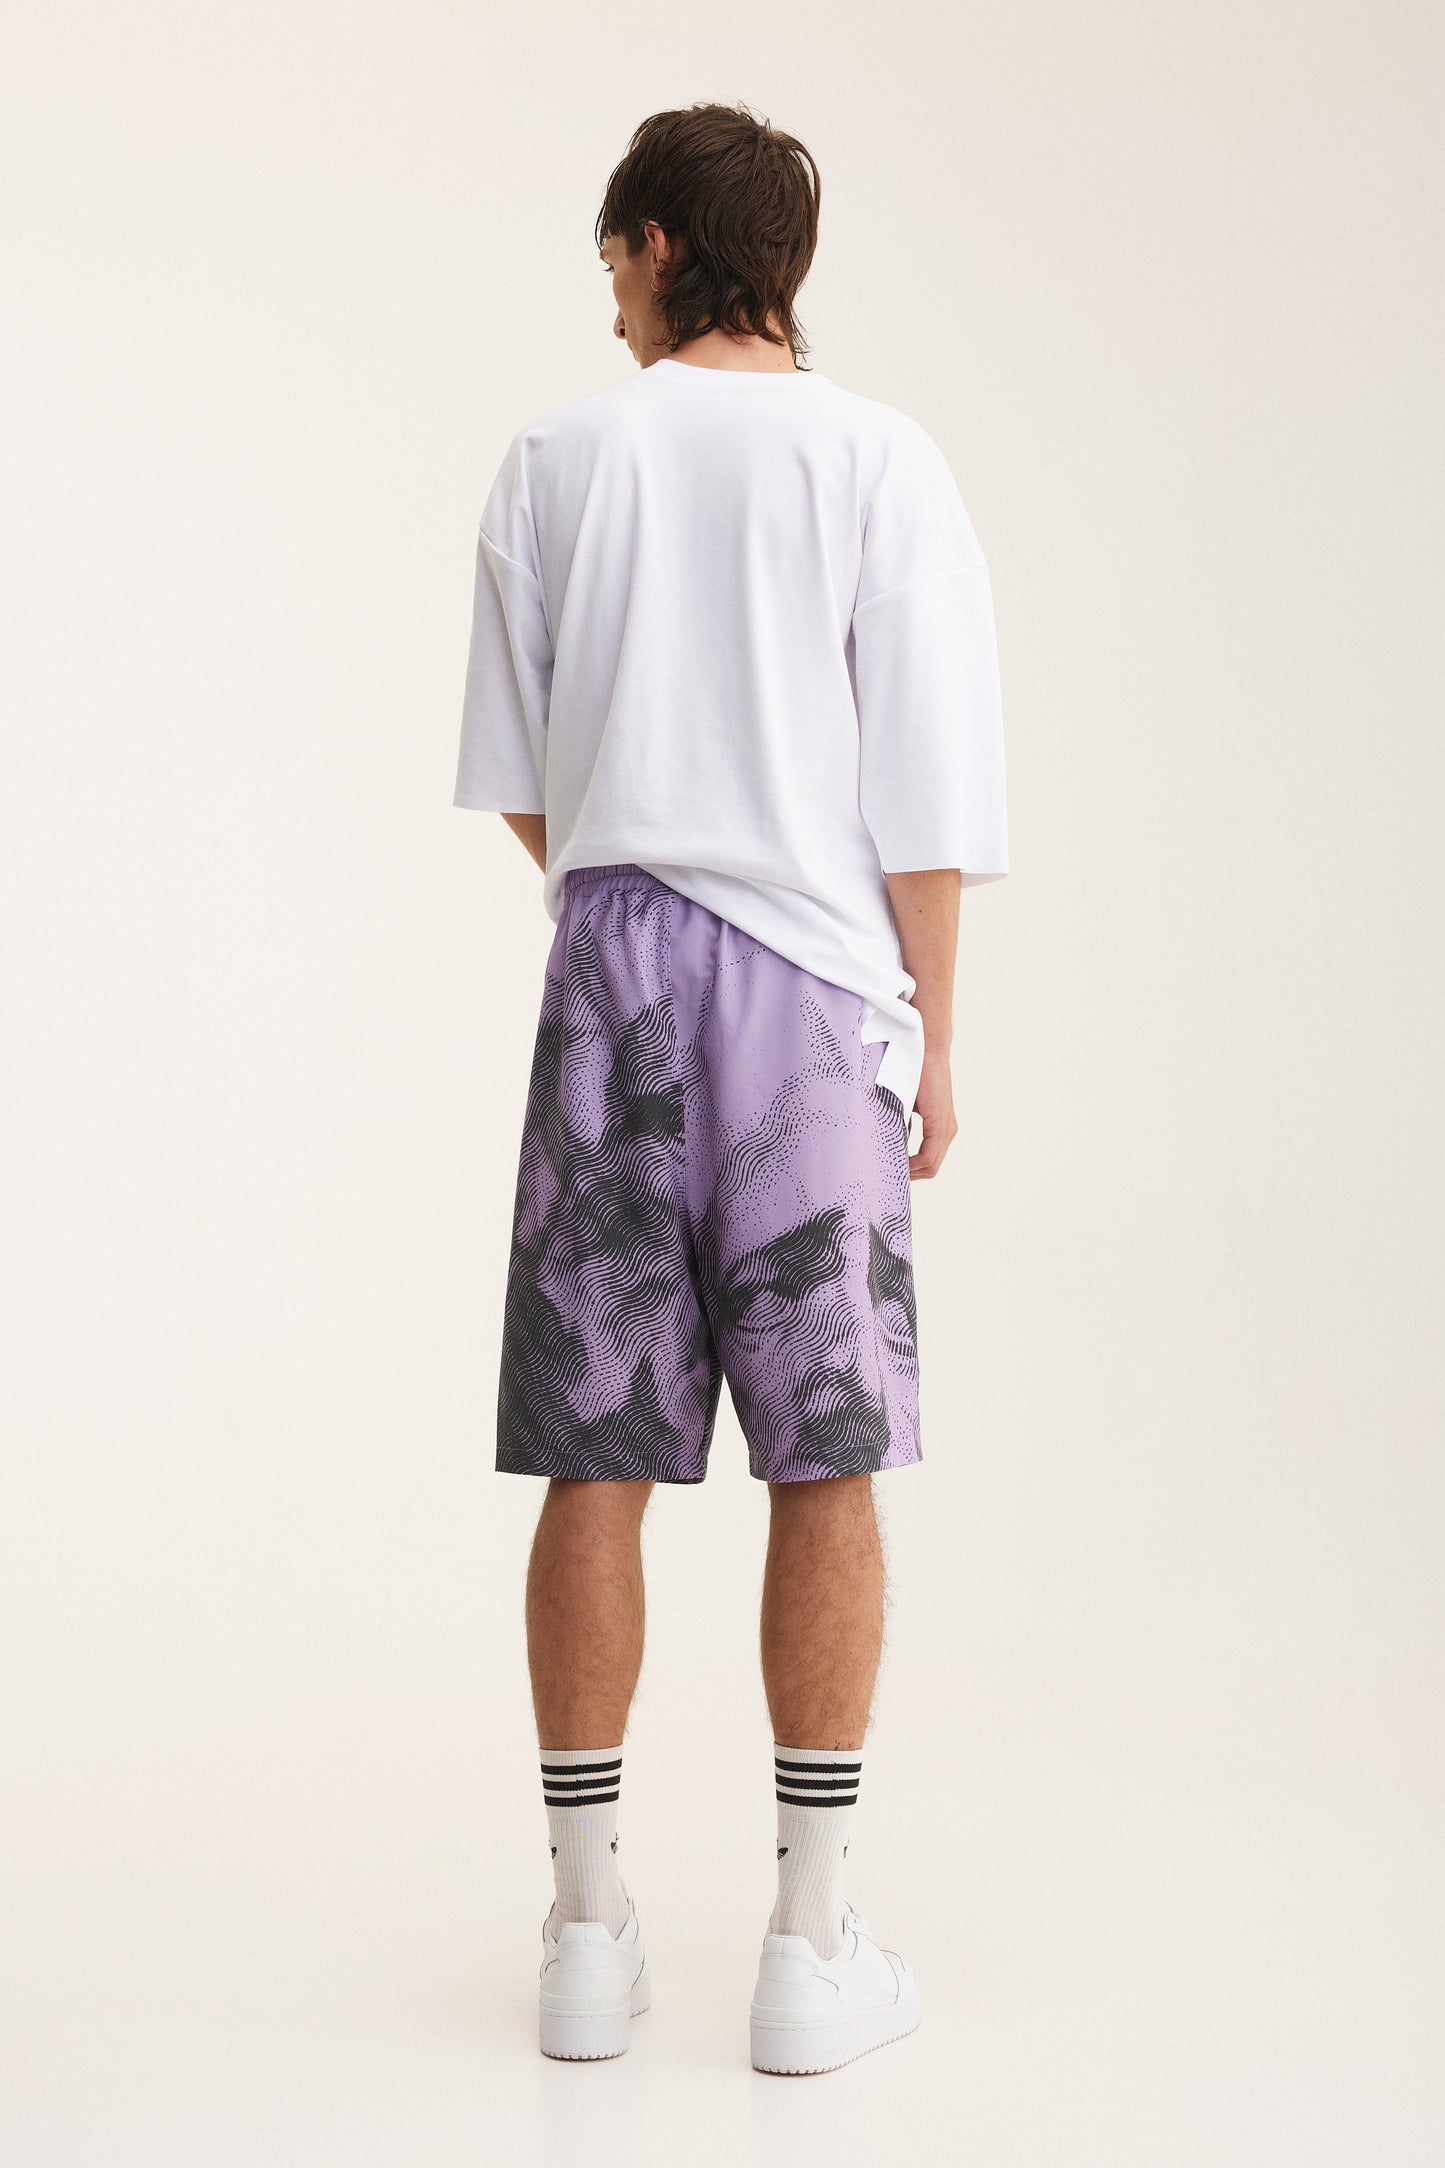 Bermuda Shorts Mauve (recycled fabric)